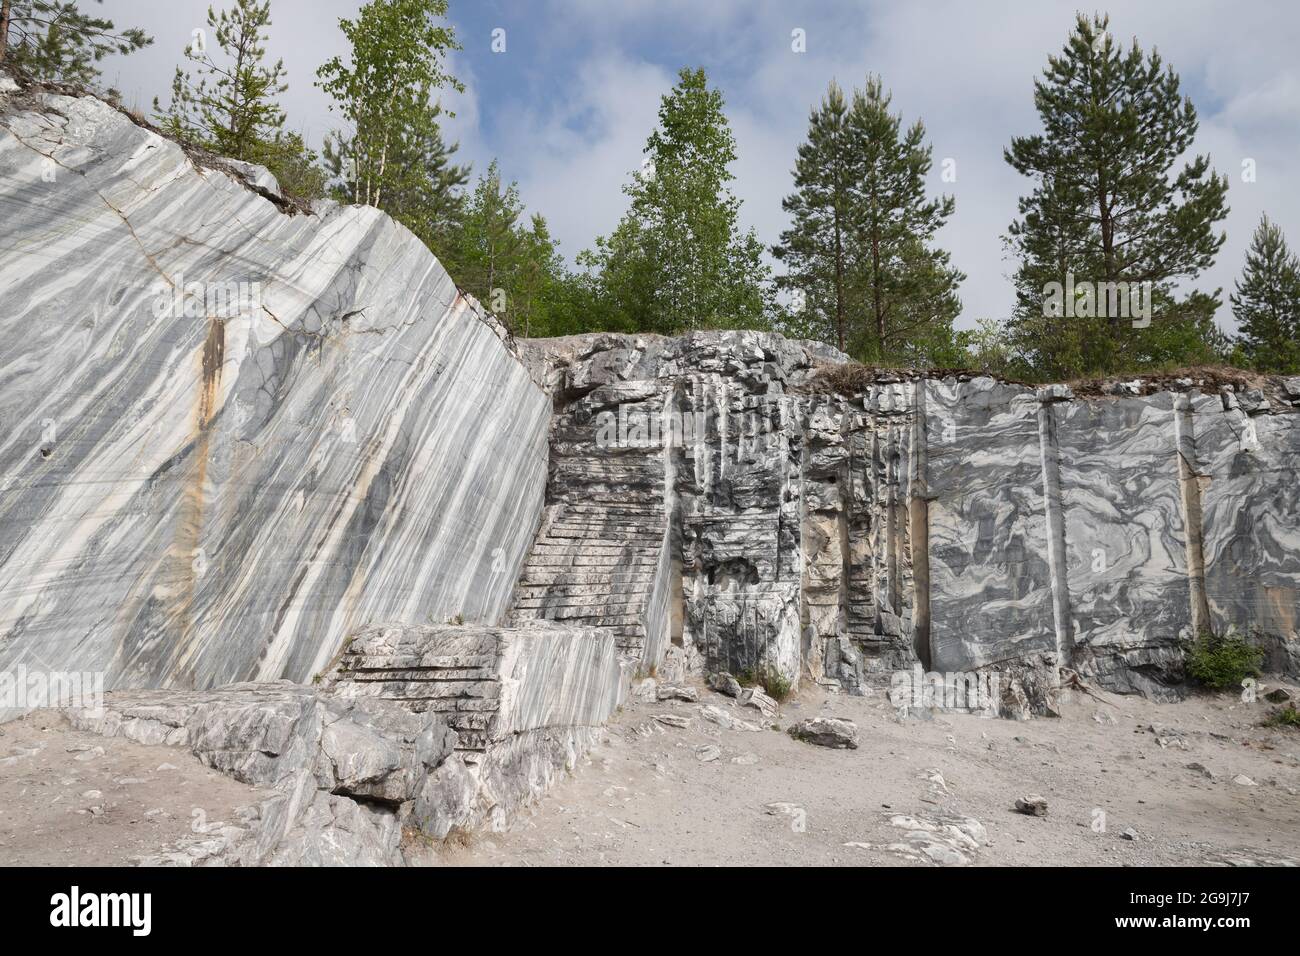 Former marble quarry on a daytime. Karelian landscape photo taken at Ruskeala, Karelia, Russia Stock Photo